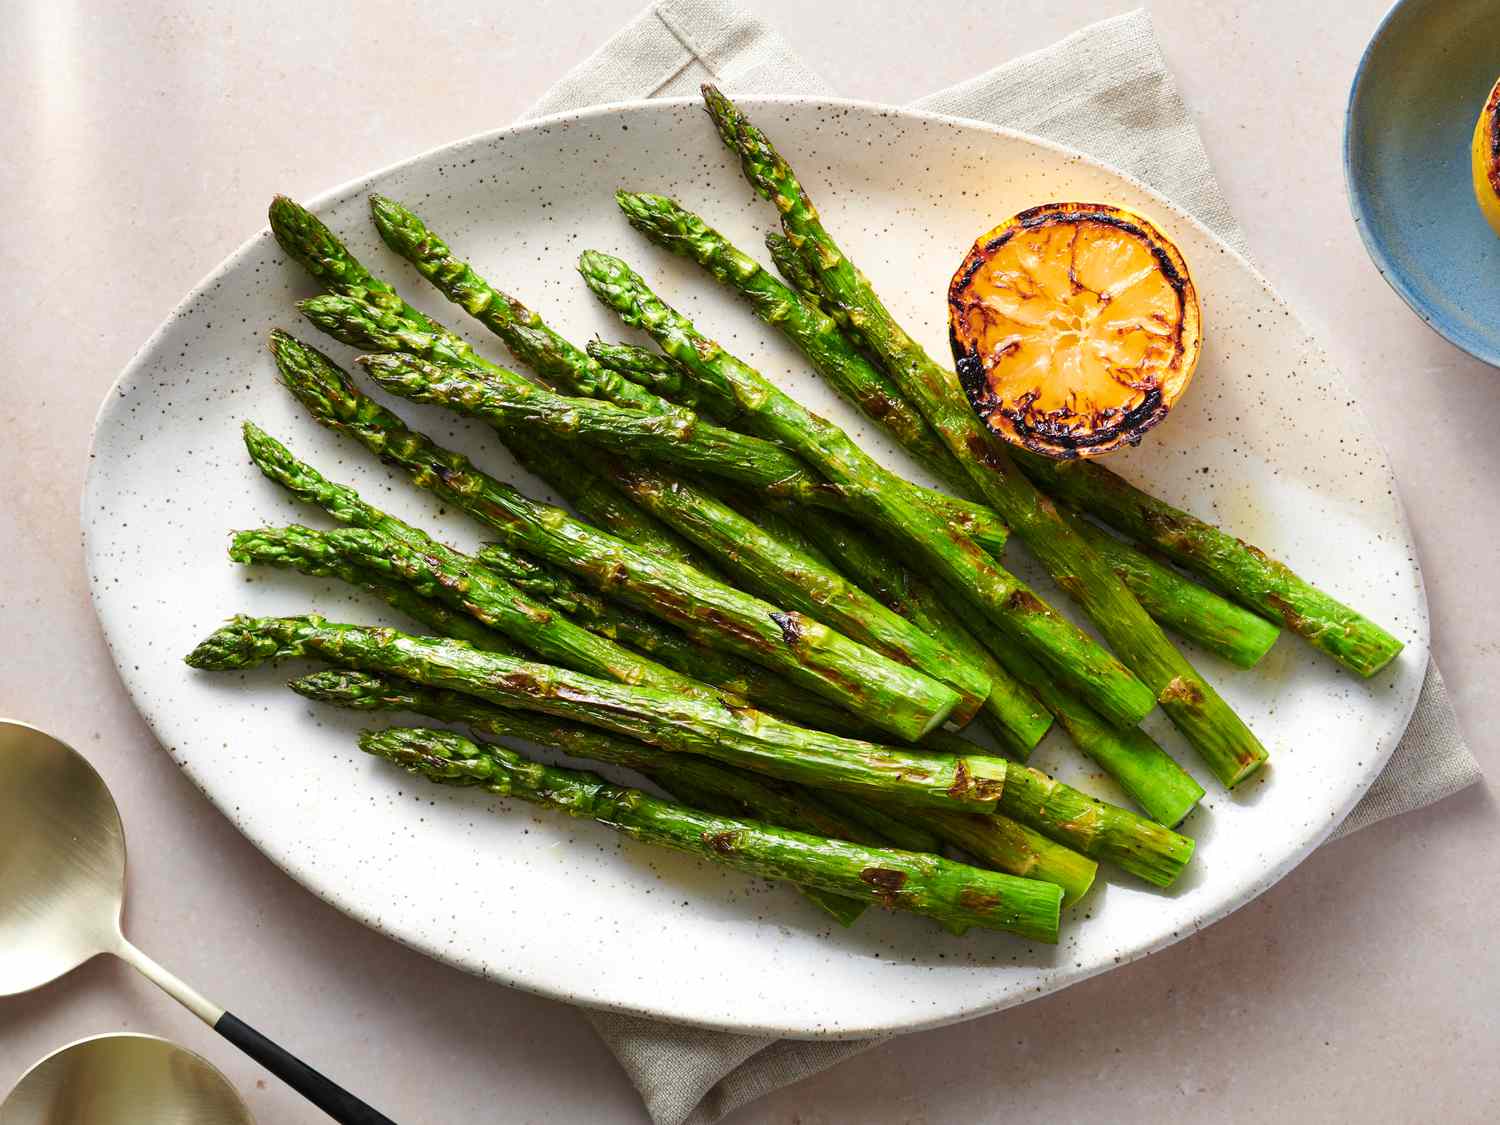 SEA-simple-grilled-asparagus-recipe-hero-02-withservingutensil-cd400626b79b49e280f07c8eaee52103.jpg